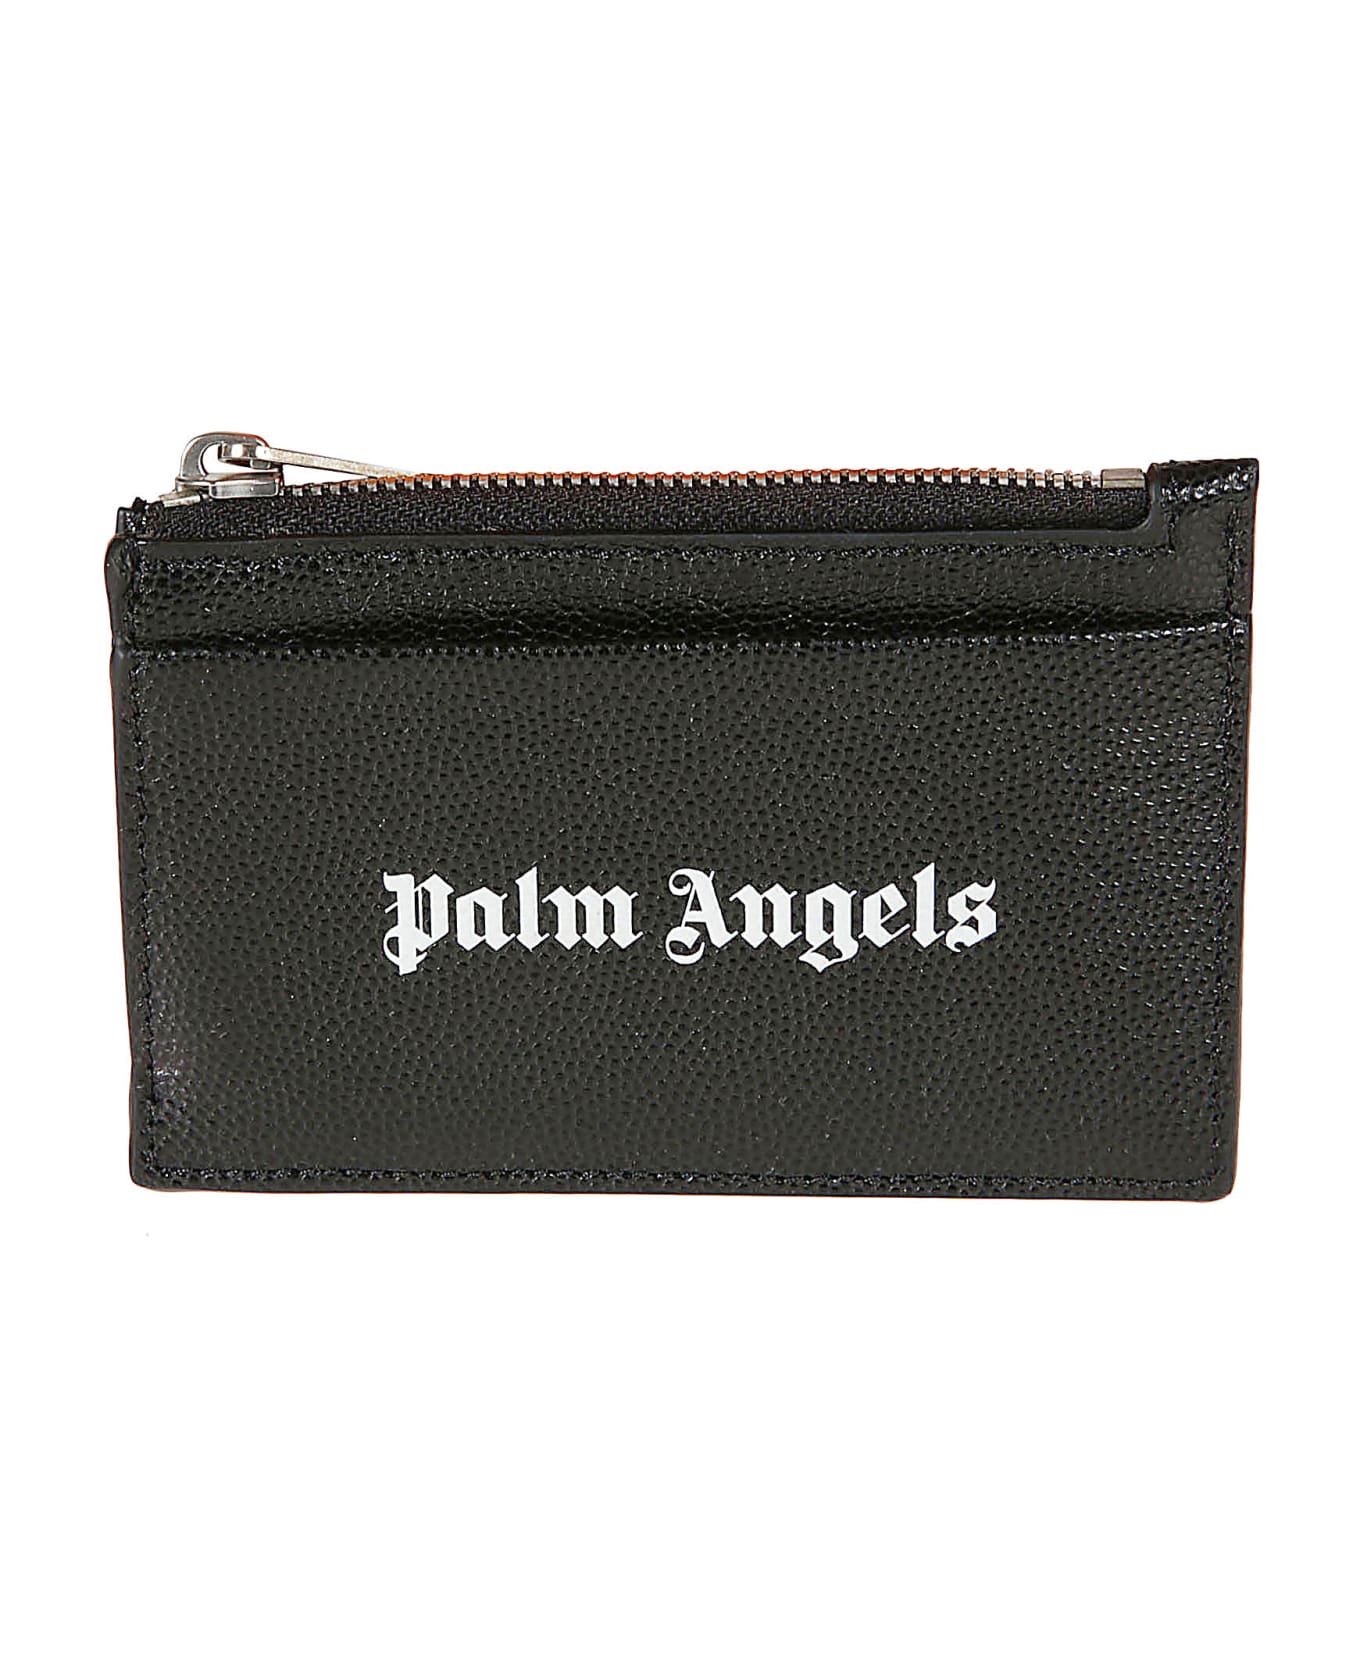 Palm Angels Zip Card Holder - Caviar Black/White 財布